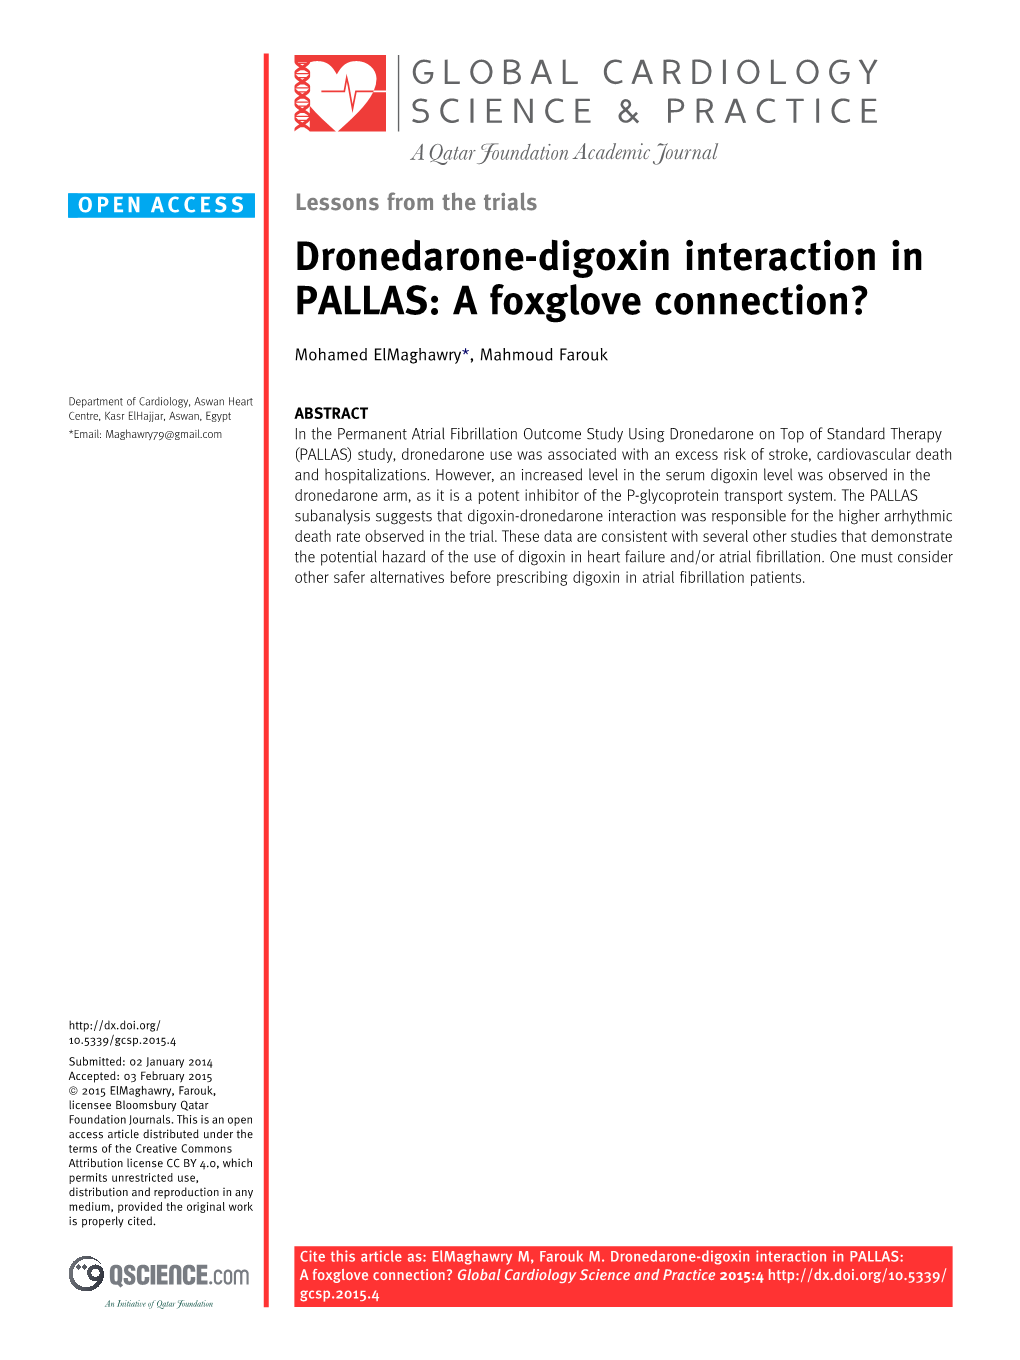 Dronedarone-Digoxin Interaction in PALLAS: a Foxglove Connection?